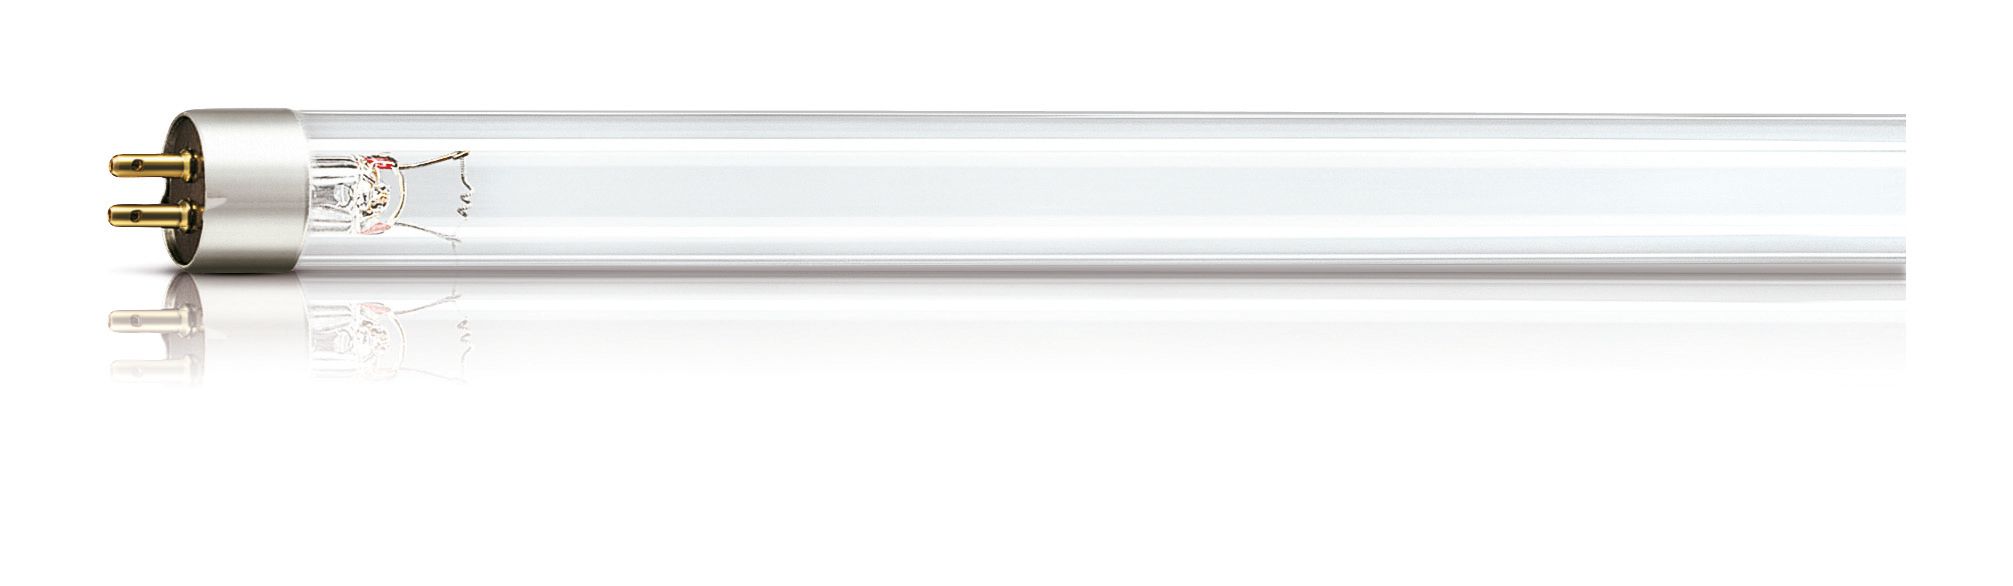 UV-C Teich Klärer Keime Brenner Philips UVC Lampe G5-25W TUV TL Mini 